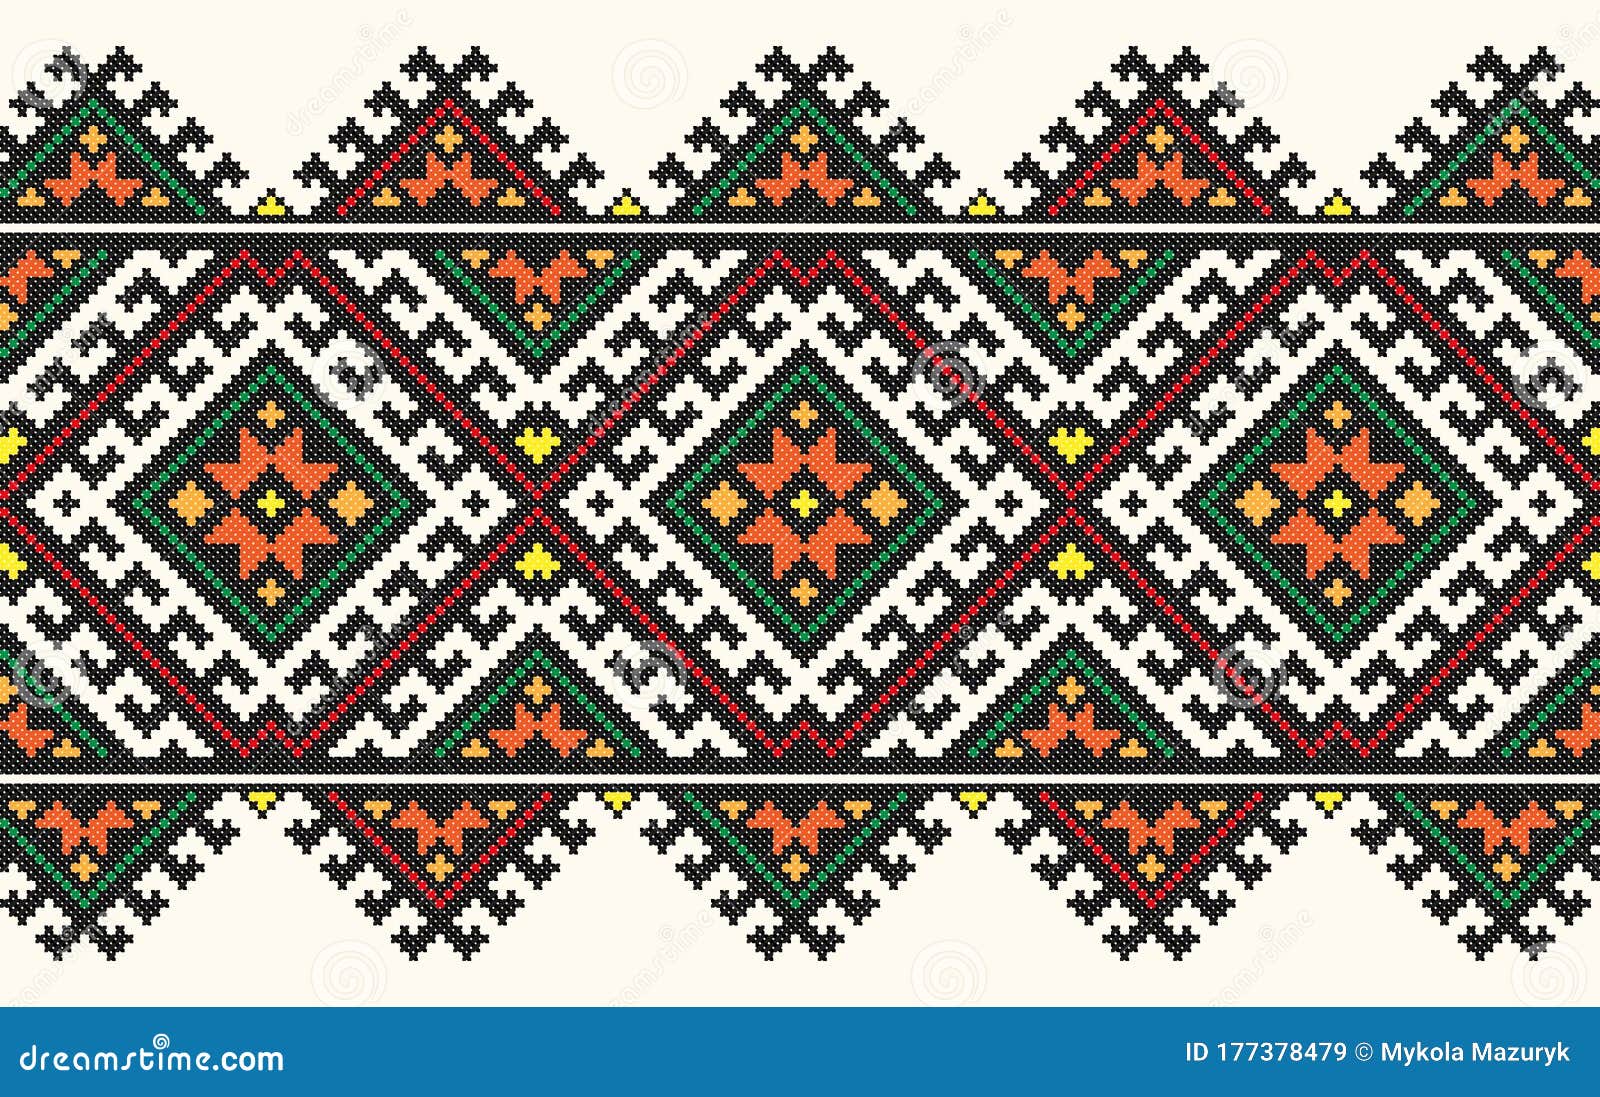 Embroidered Good Like Old Handmade Cross-stitch Ethnic Ukraine Pattern ...